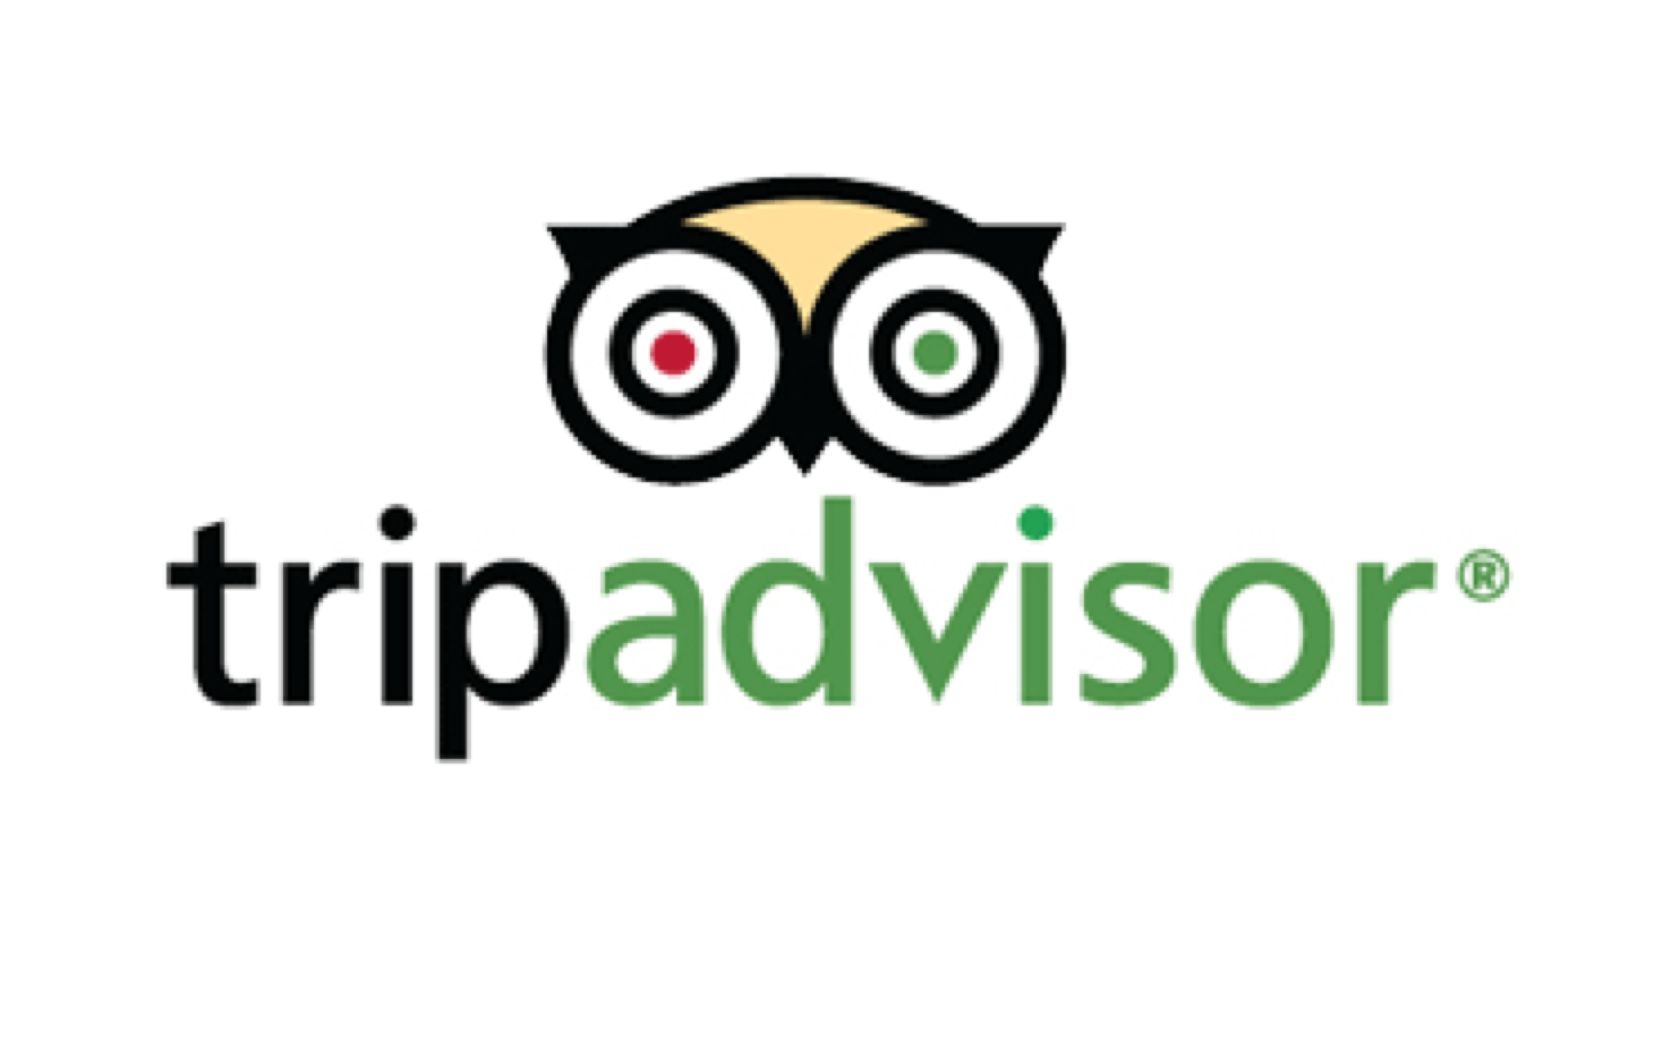 Tripadvisor Logo Vector Download - Tripadvisor Vector, Transparent background PNG HD thumbnail